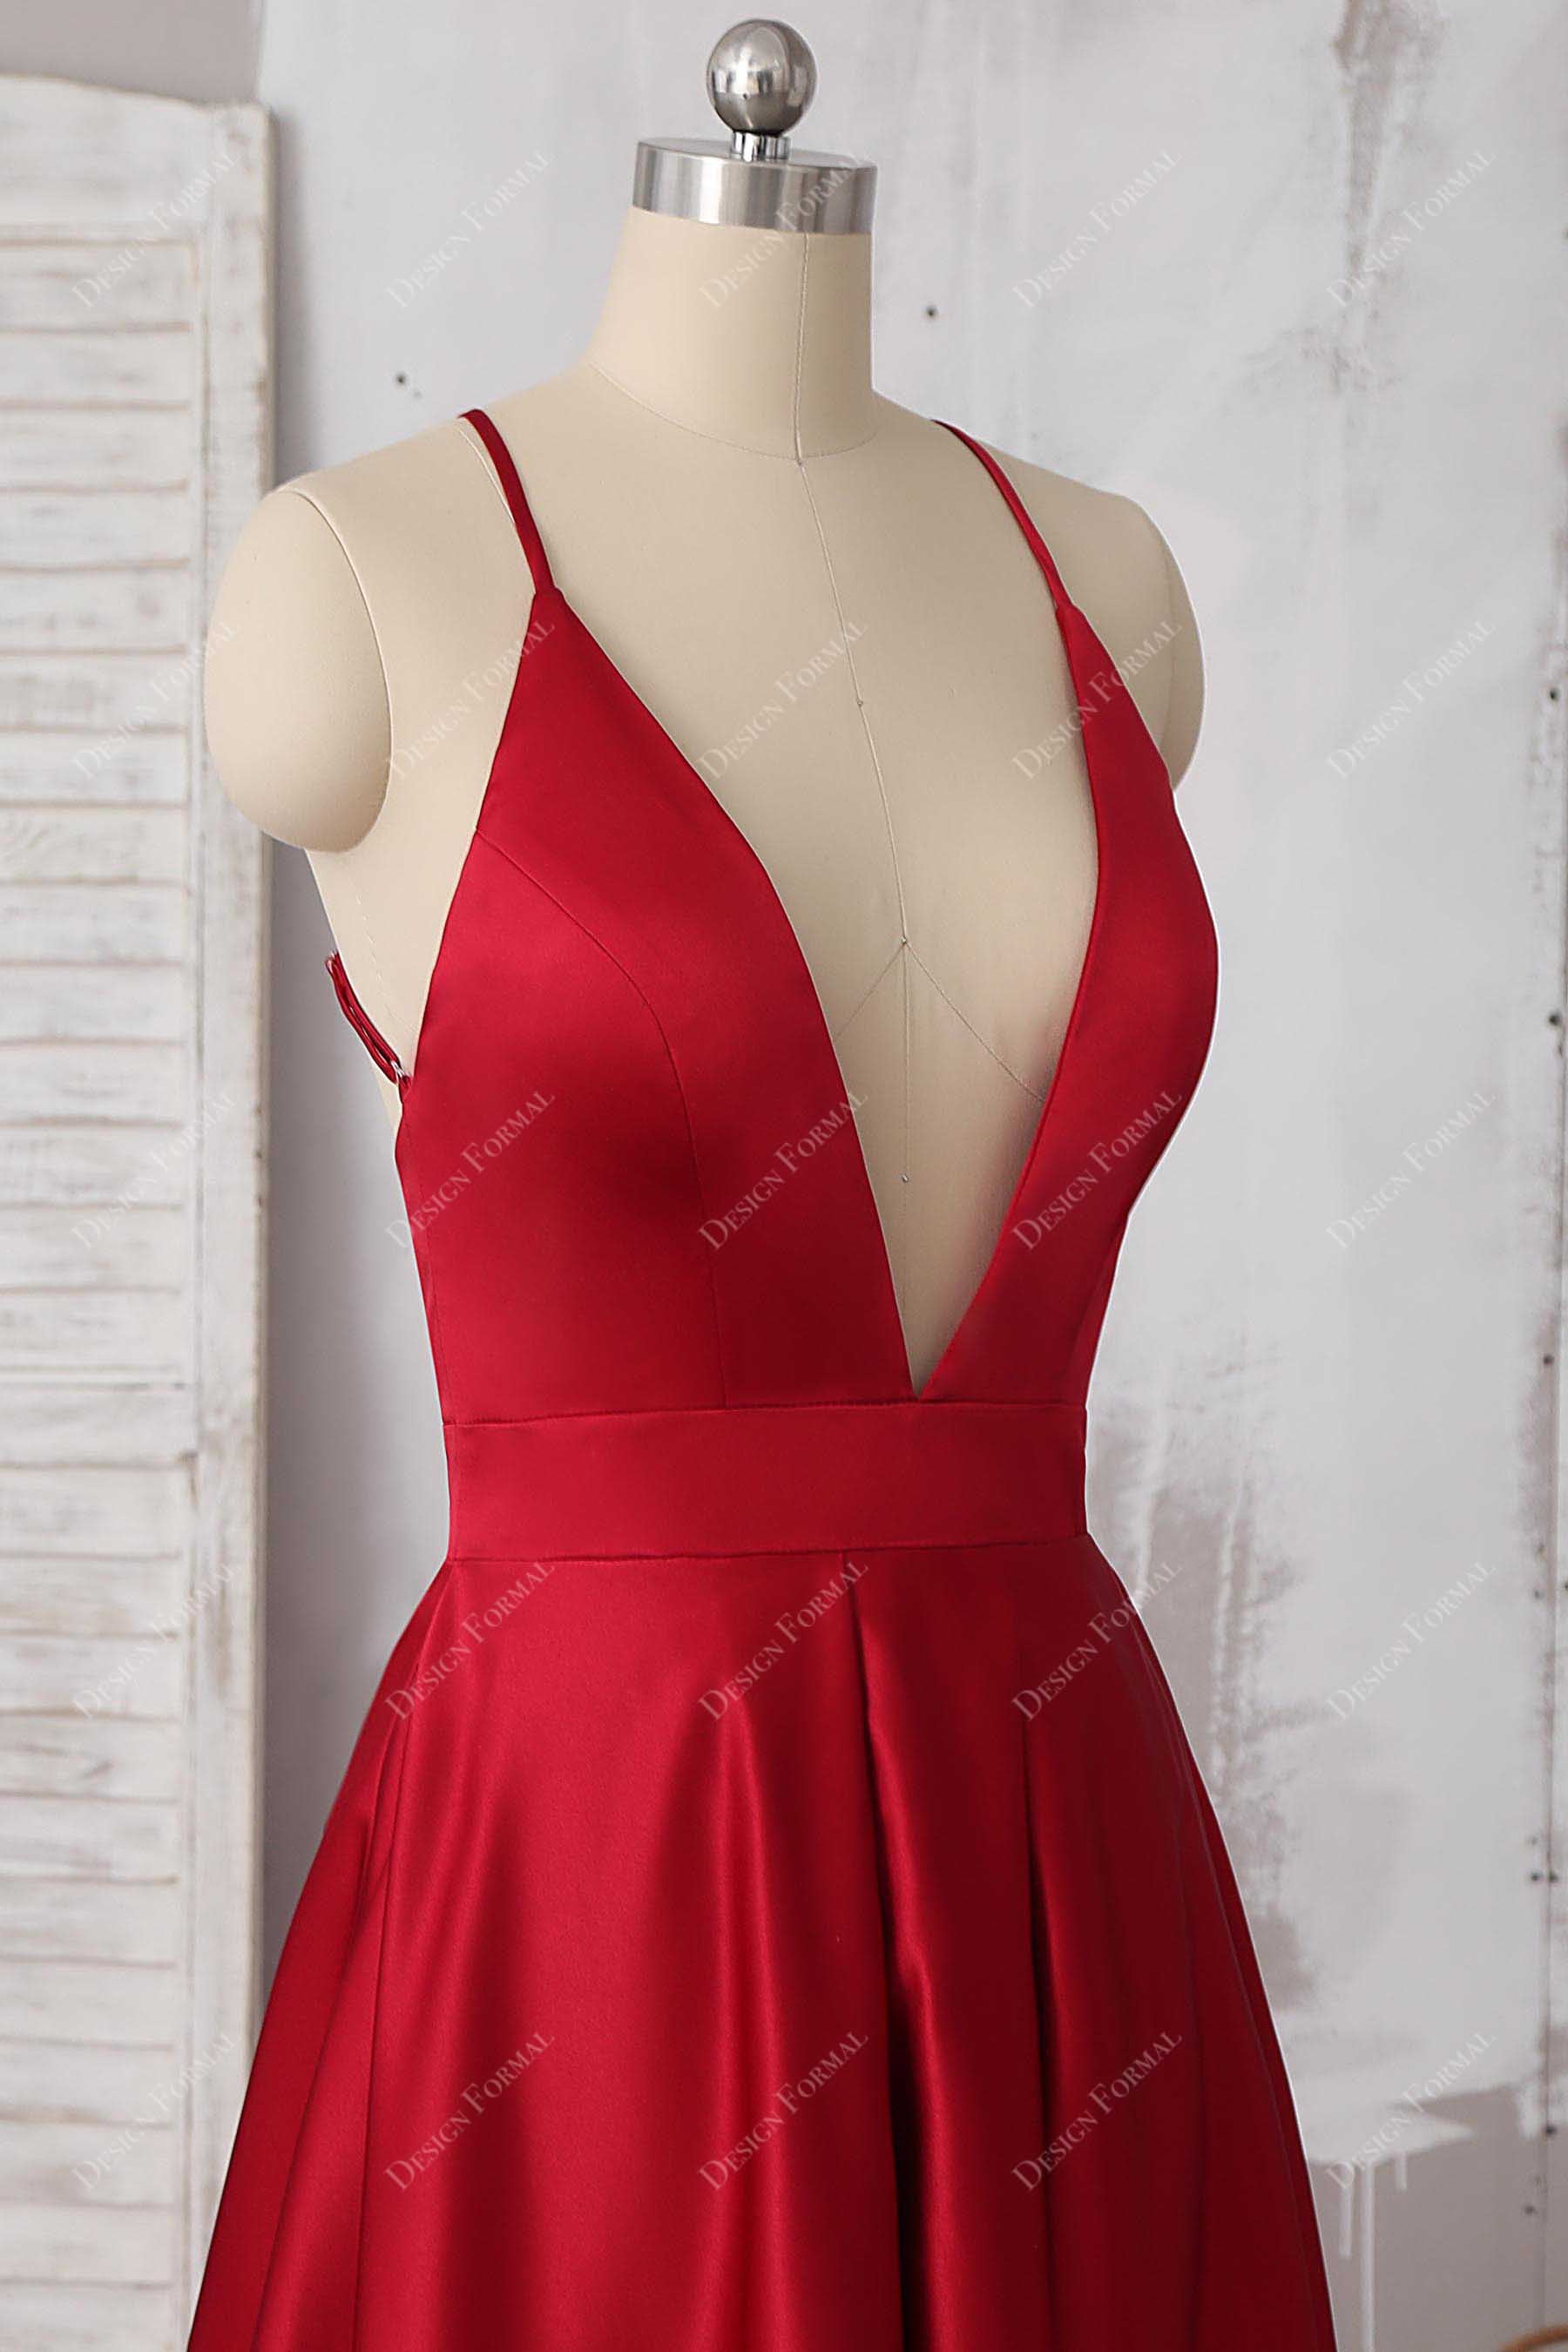 sleeveless thin straps dress